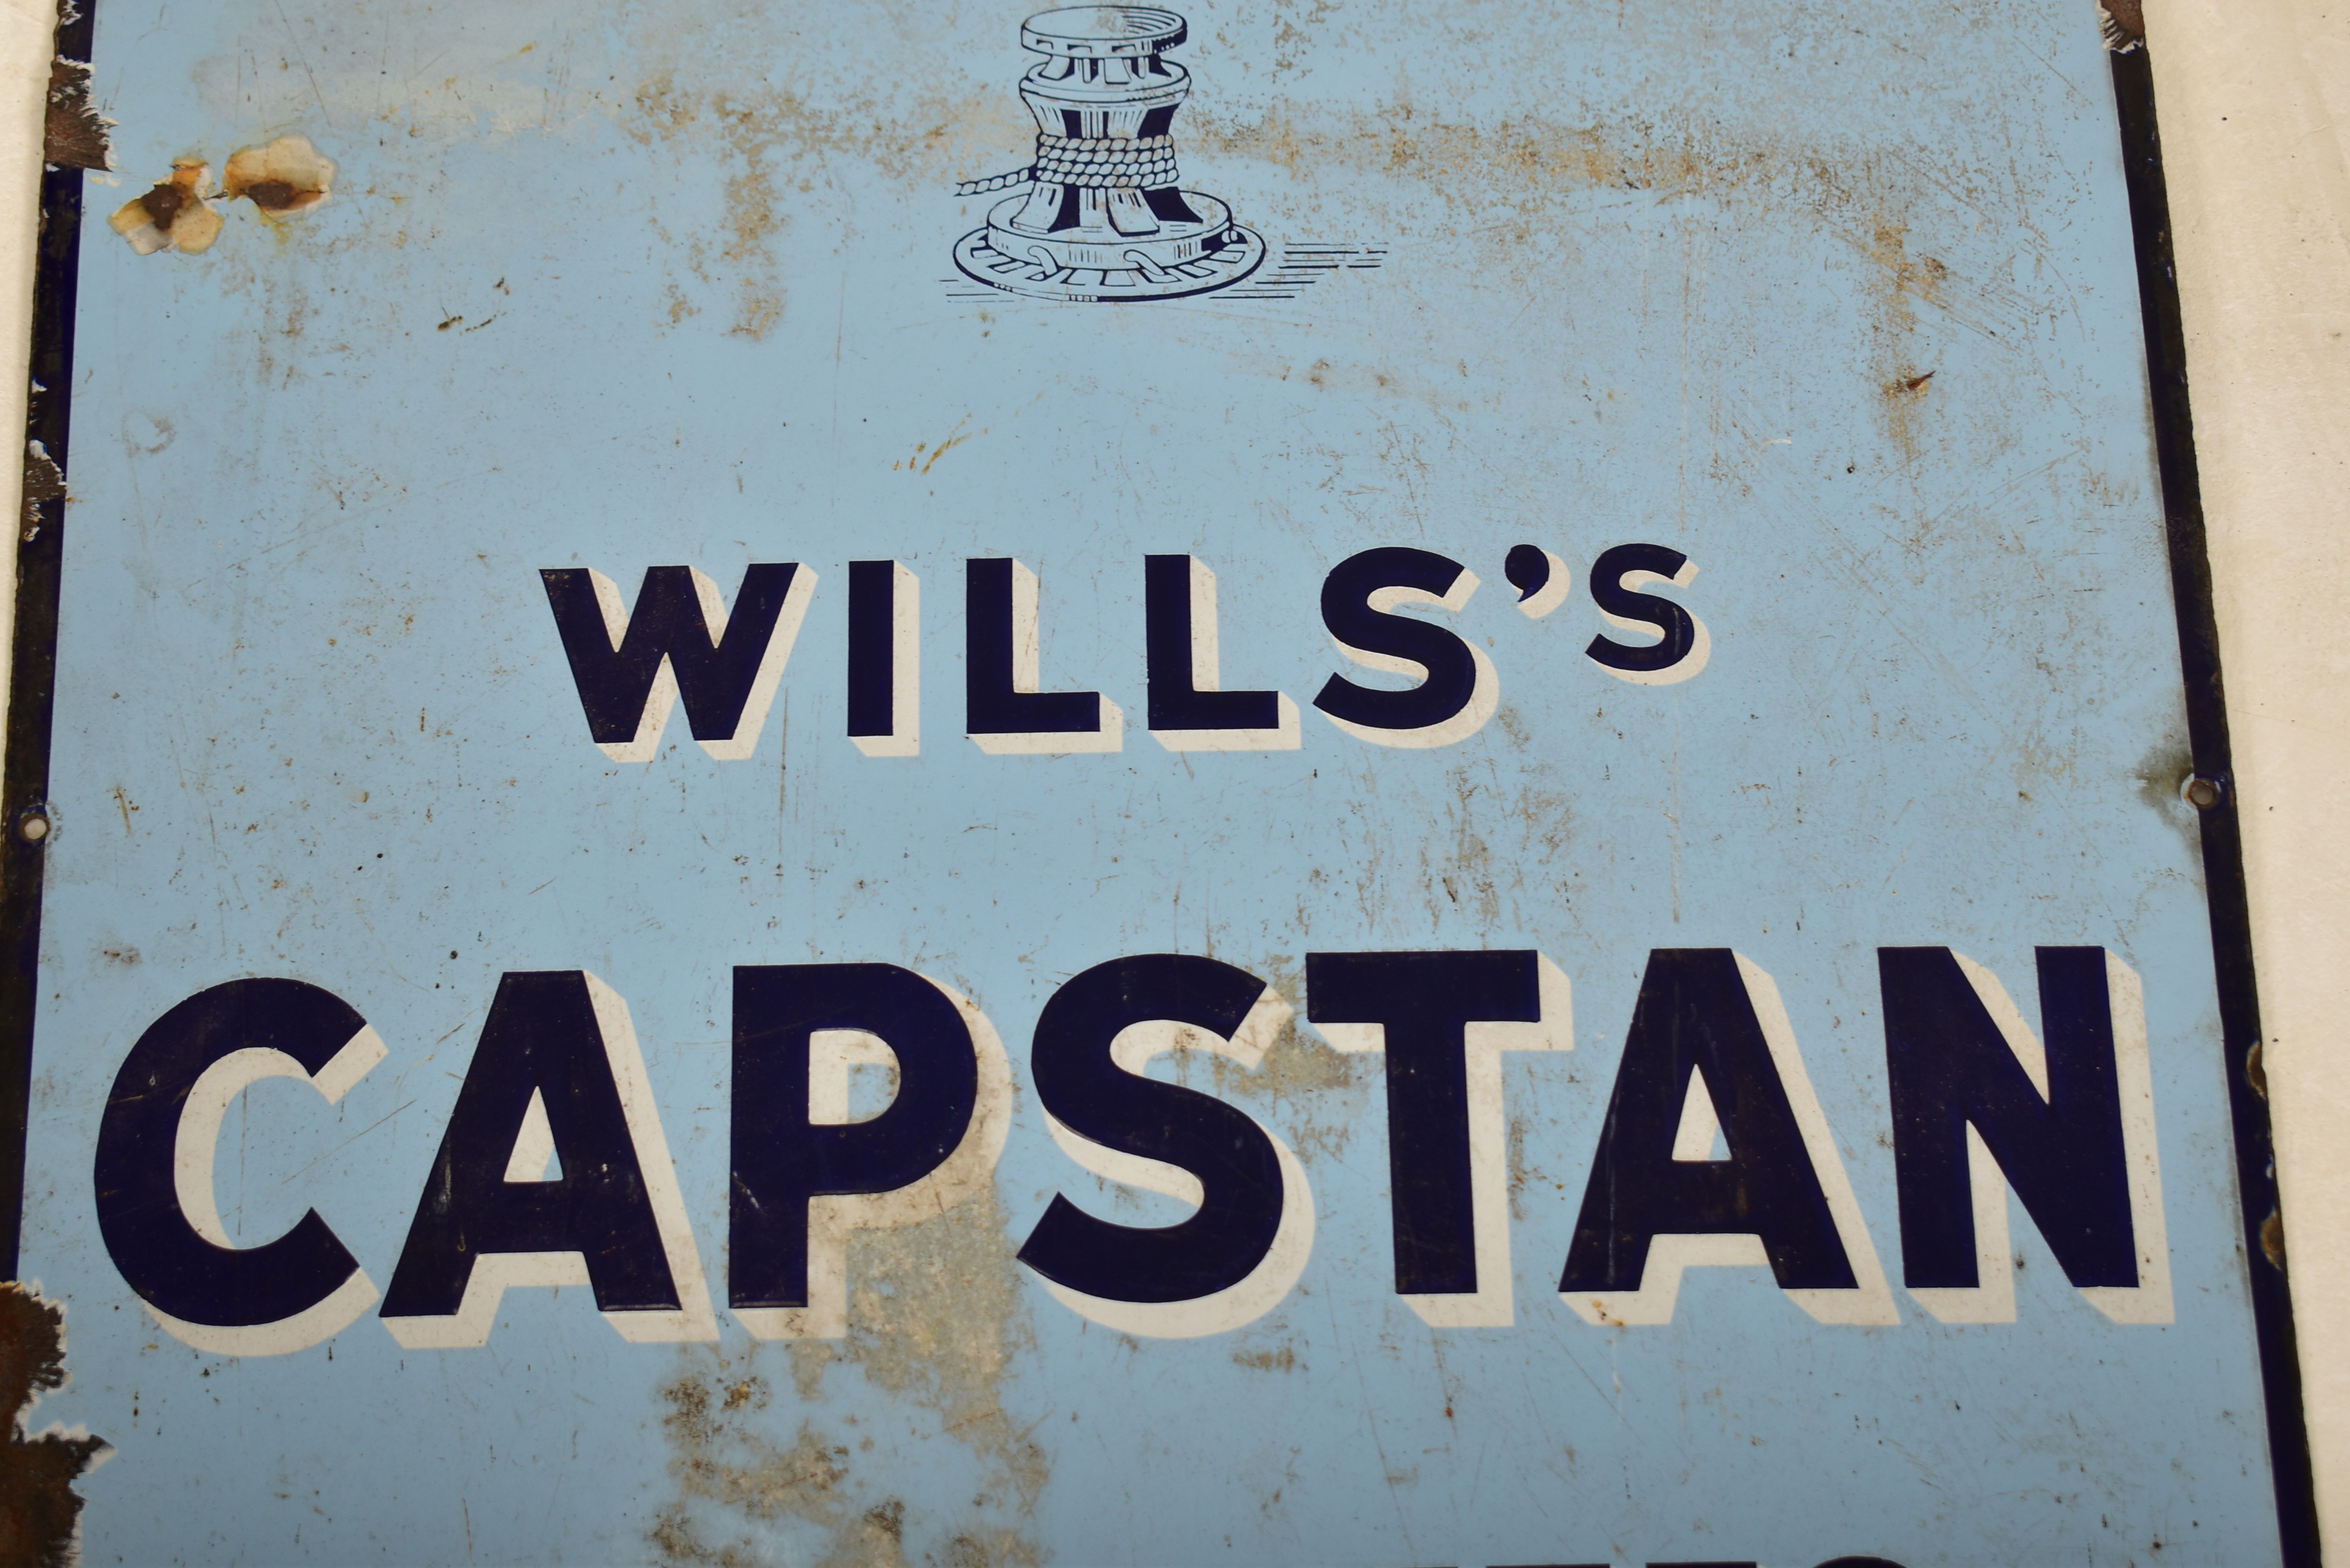 WILLS CAPSTAN CIGARETTES - VINTAGE ADVERTISING ENAMEL SIGN - Image 2 of 4